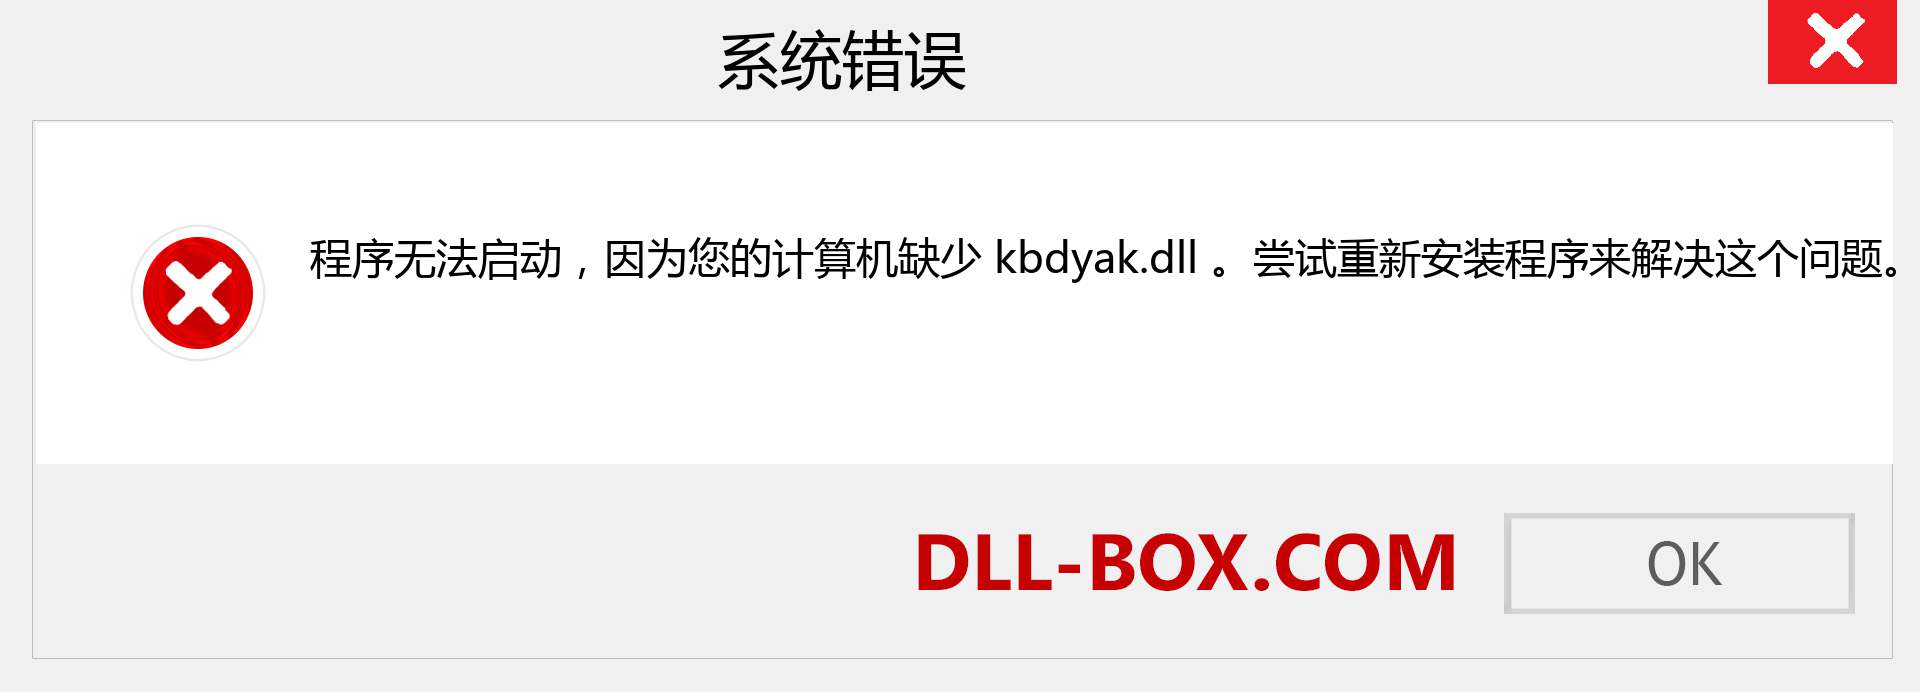 kbdyak.dll 文件丢失？。 适用于 Windows 7、8、10 的下载 - 修复 Windows、照片、图像上的 kbdyak dll 丢失错误